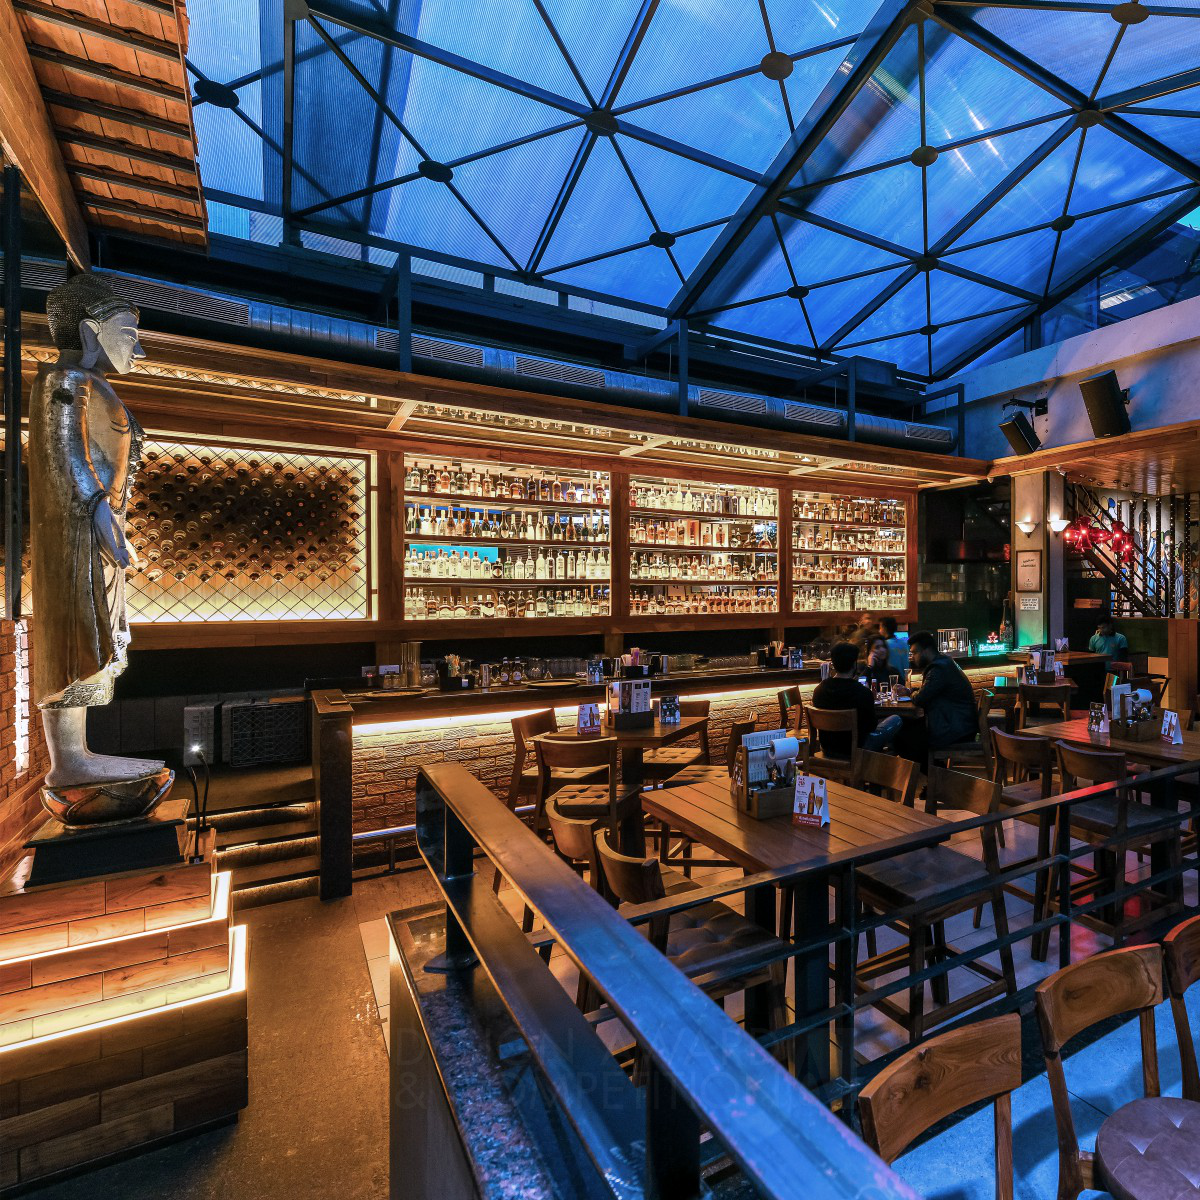 Club tao Restaurant and bar by devesh pratyay